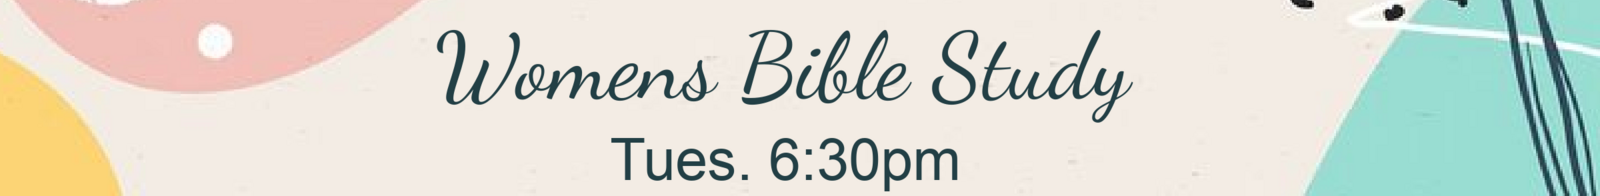 Womens bible study banner